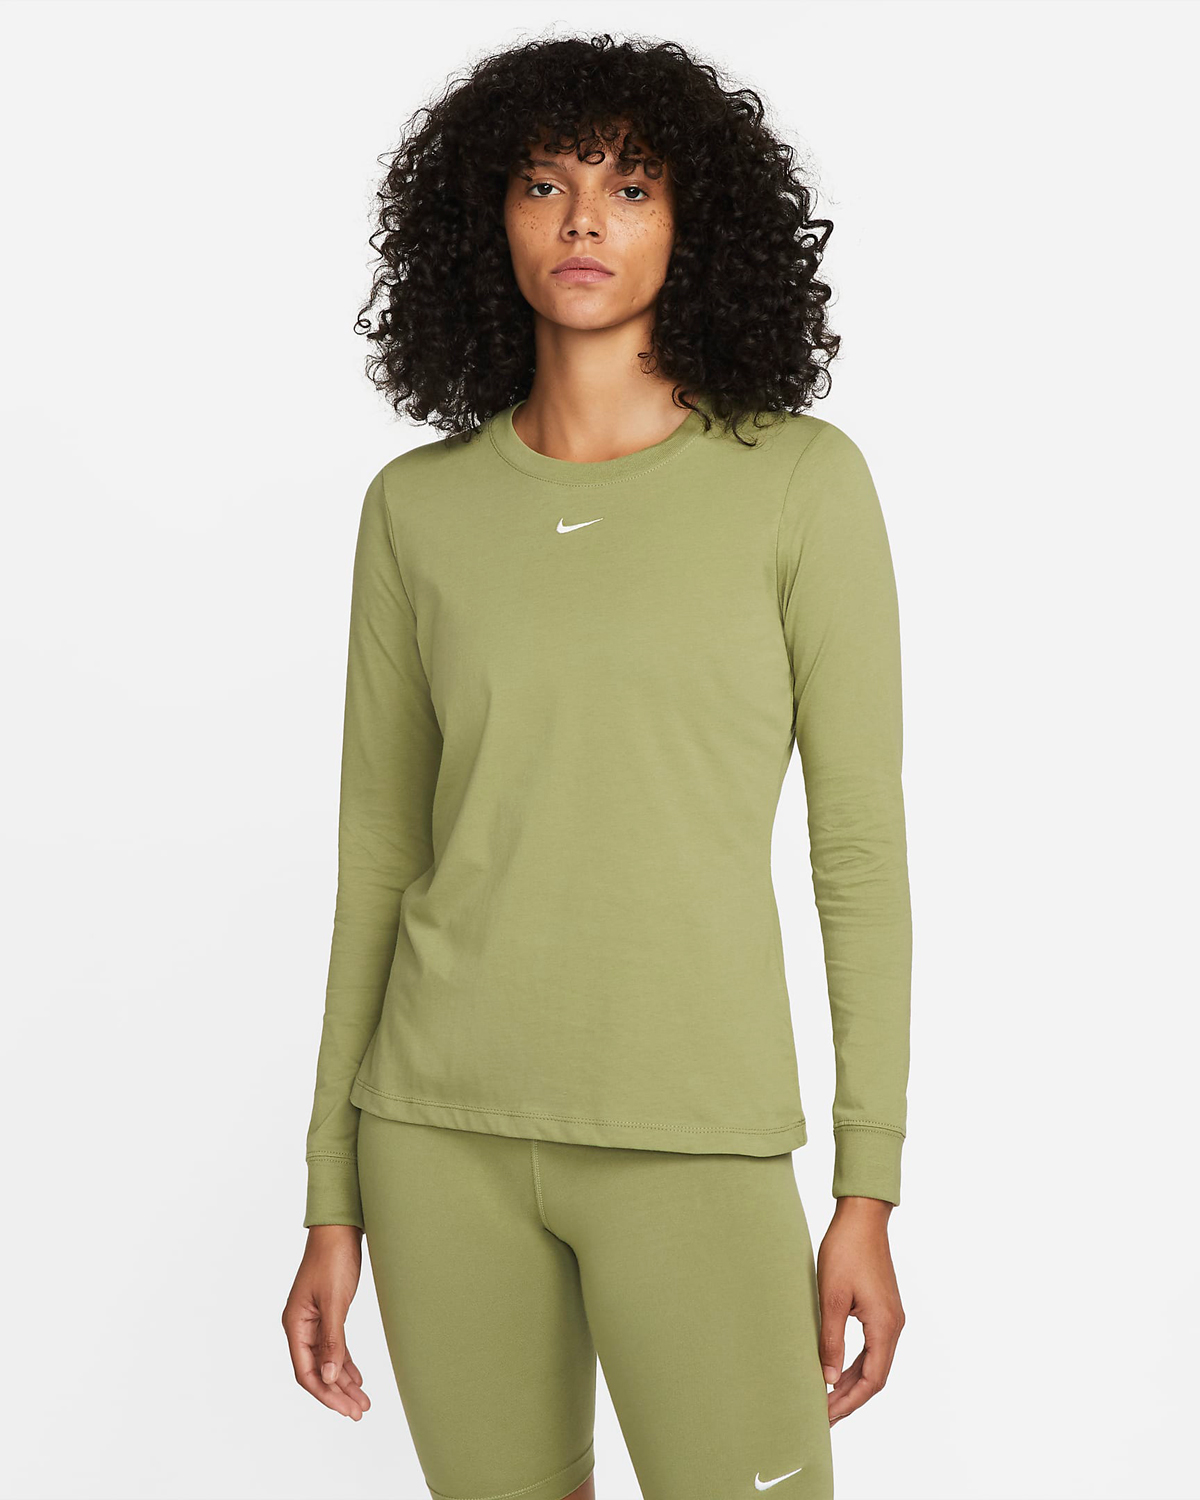 Nike-Sportswear-Womens-Long-Sleeve-T-Shirt-Alligator-Green